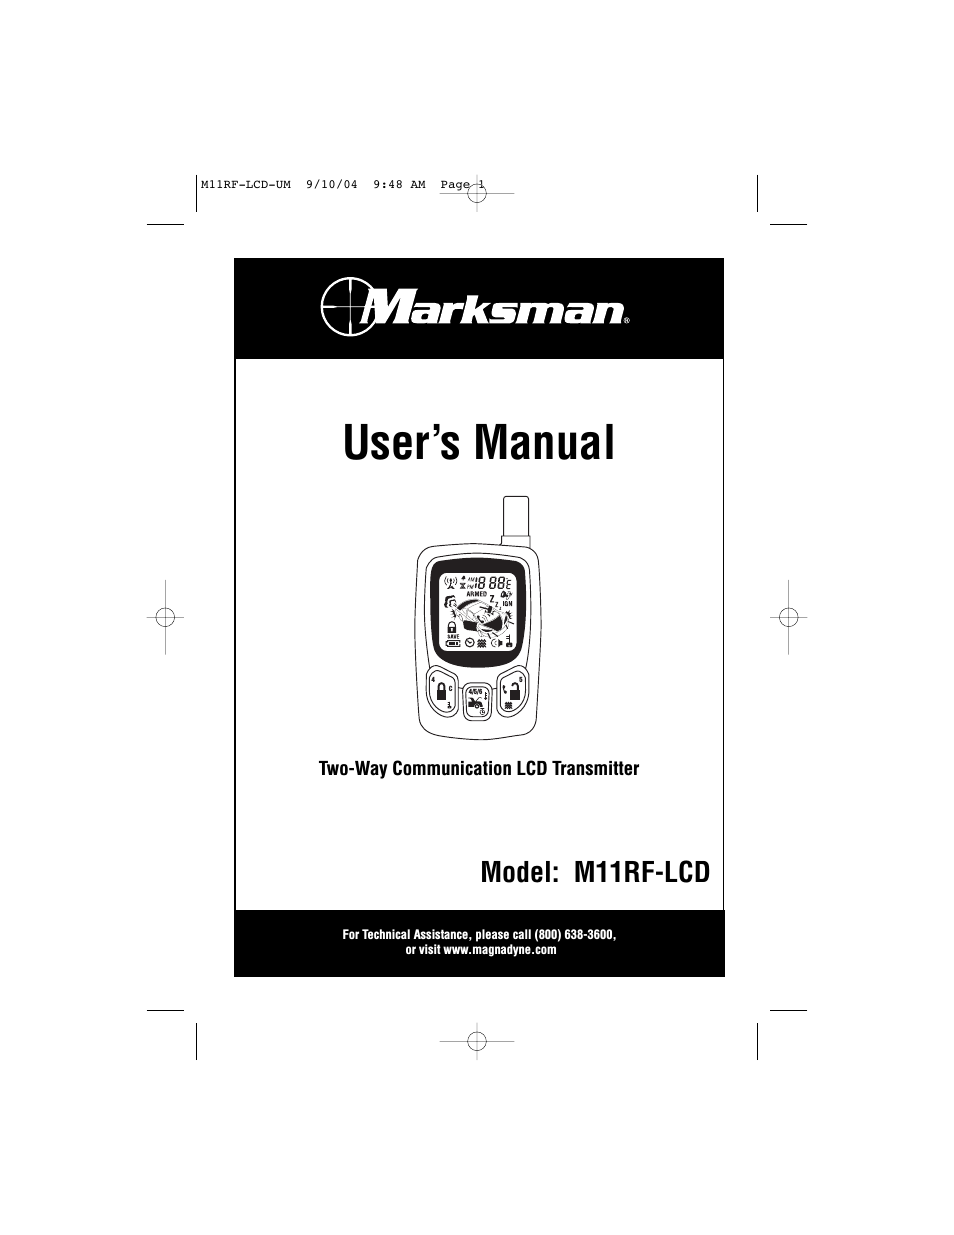 Marksman two-way communication LCD Transmitter M11RF-LCD